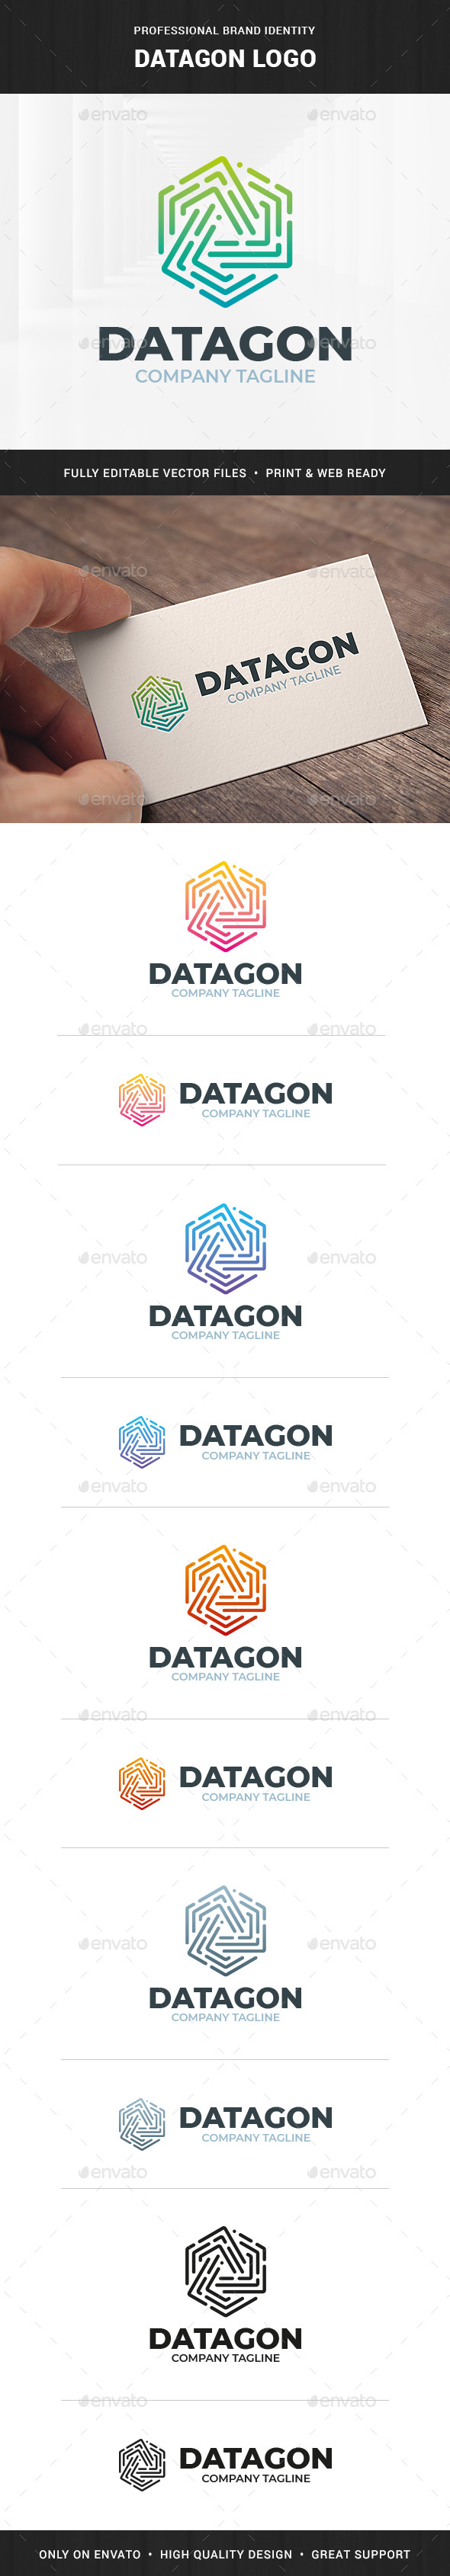 [DOWNLOAD]Datagon Logo Template